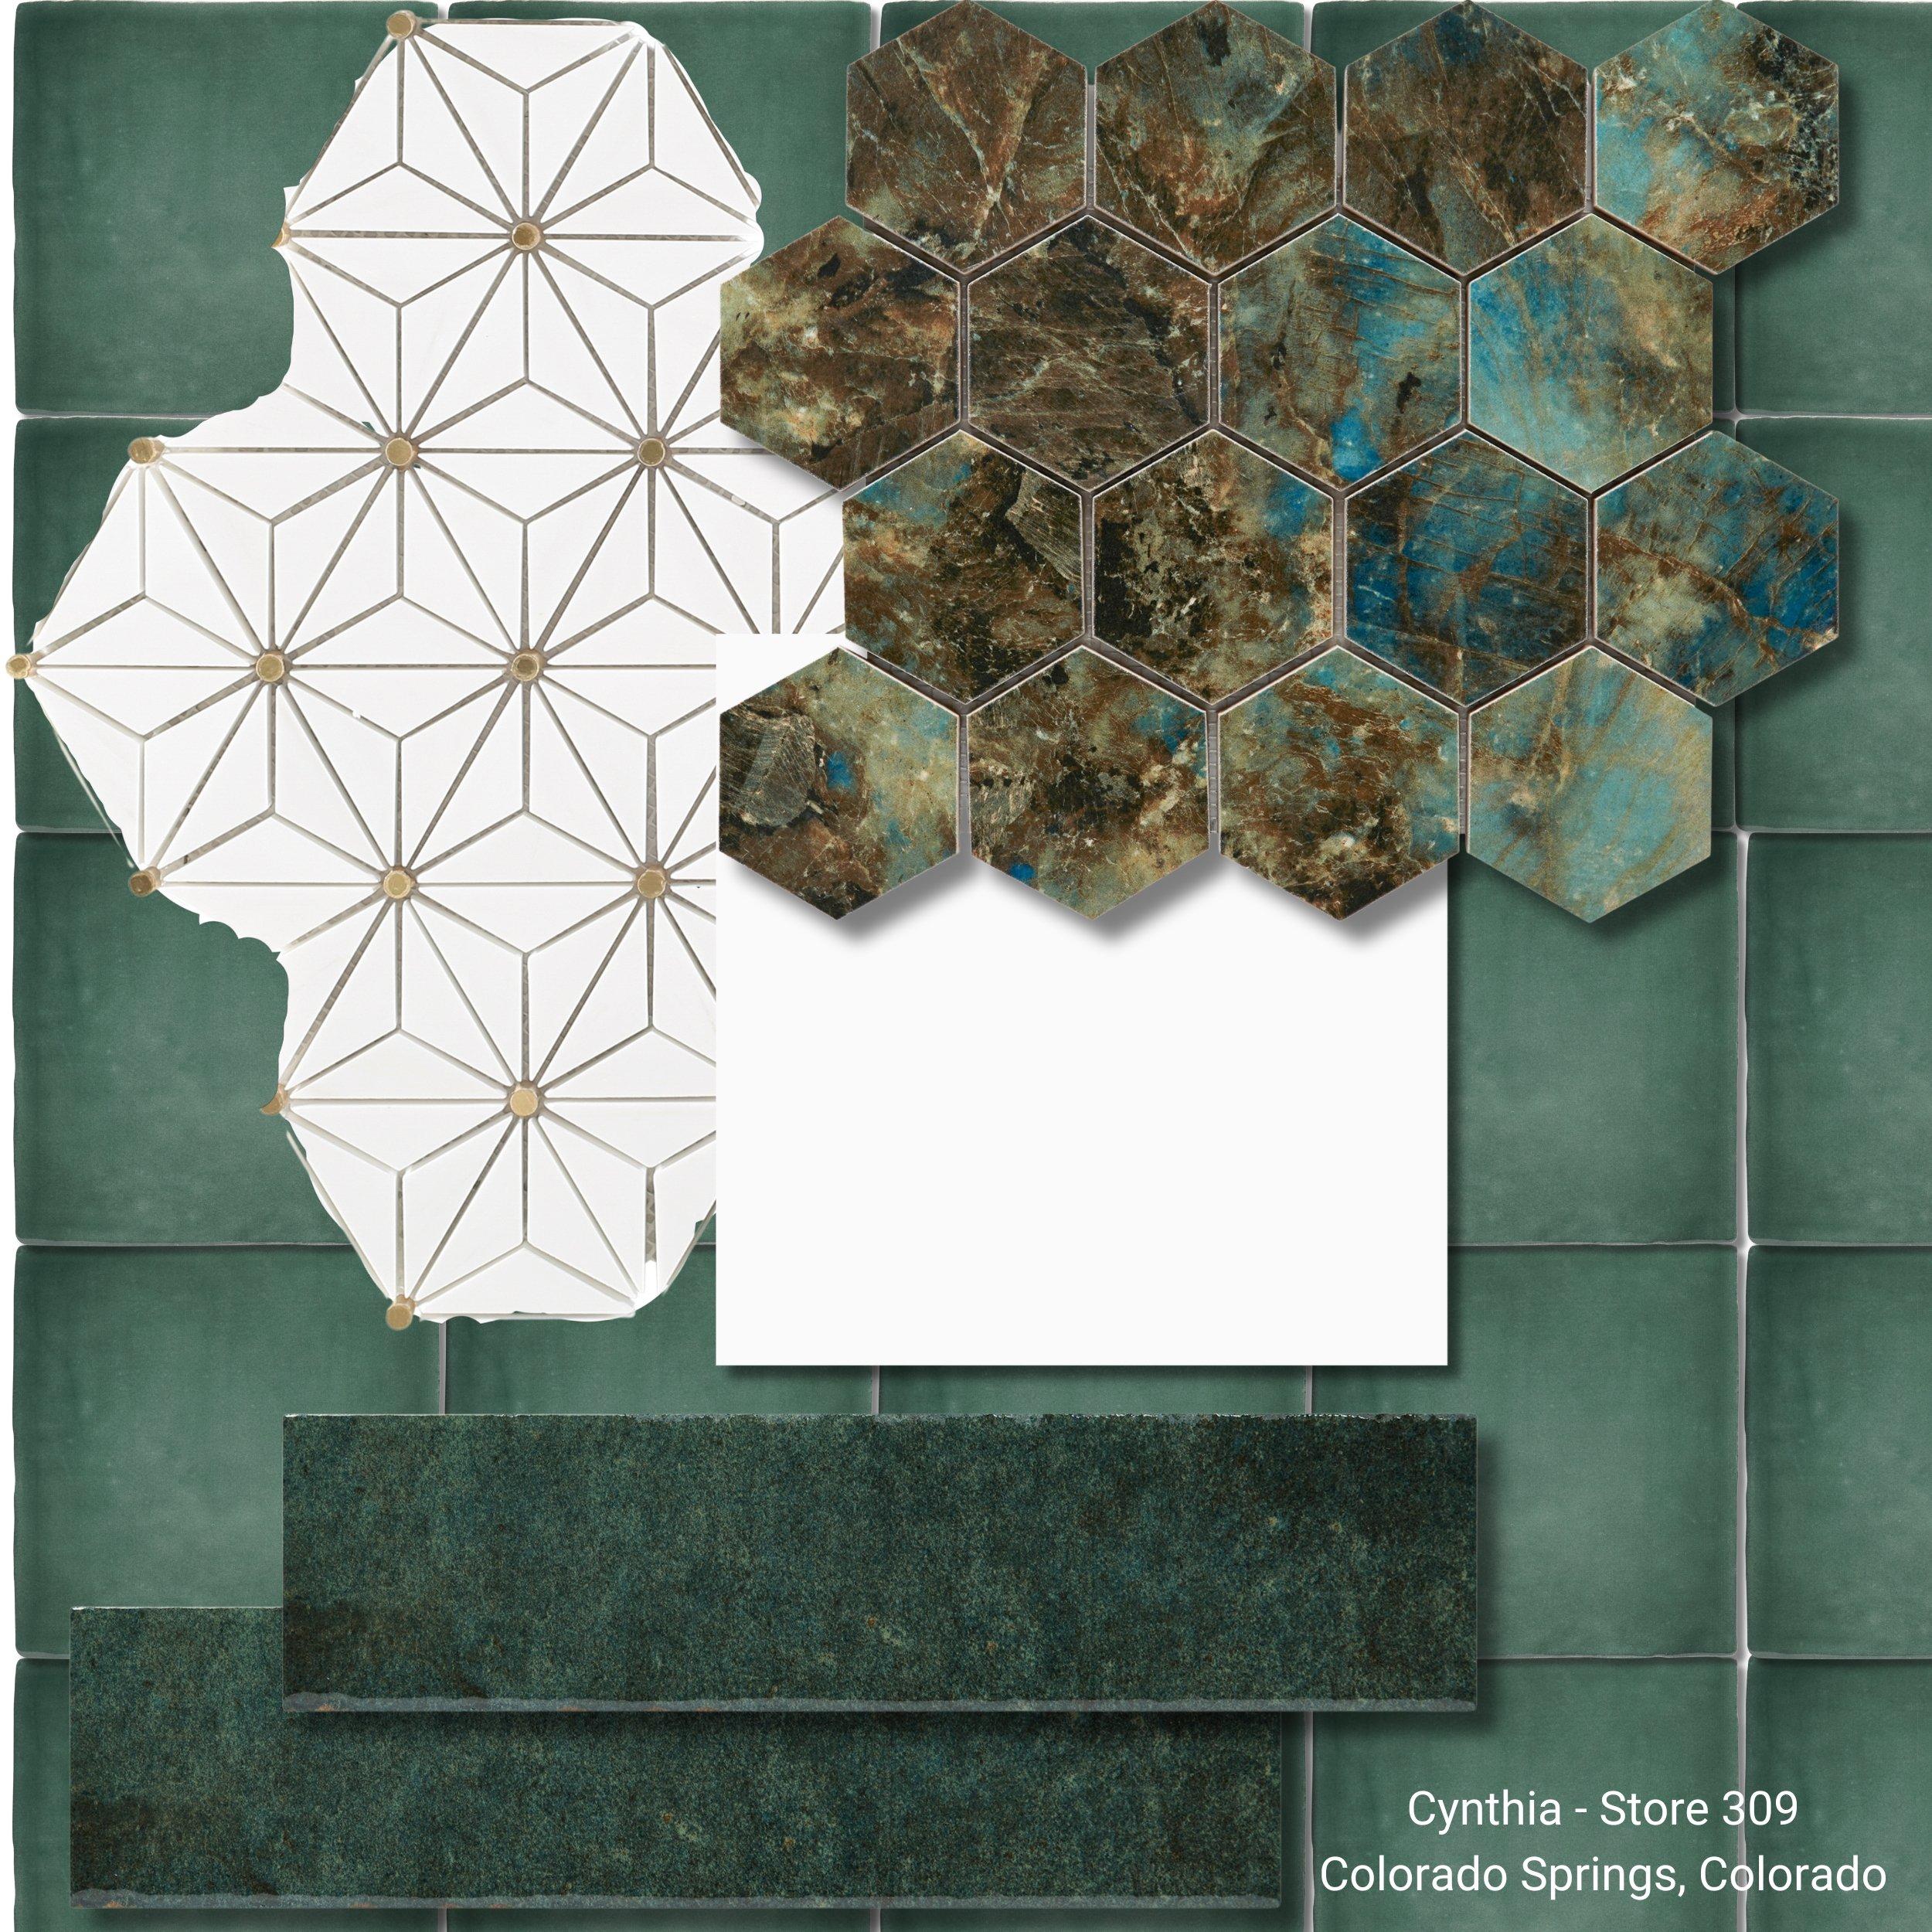 Nova Dolomite Brass Polished Marble Mosaic